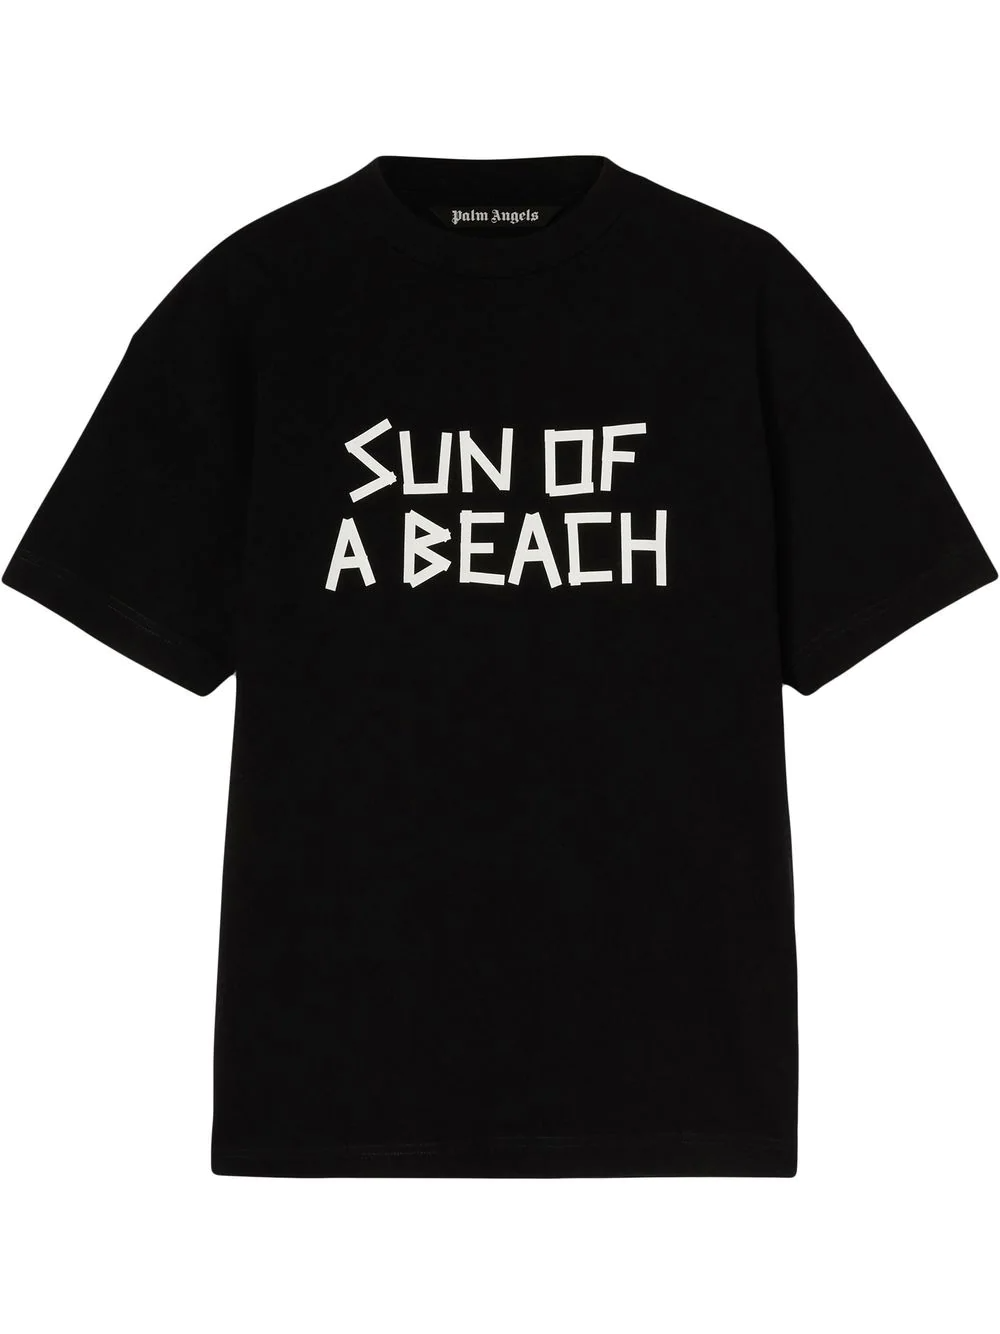 PALM ANGELS SUN OF A BEACH LOGO T-SHIRT 'BLACK'